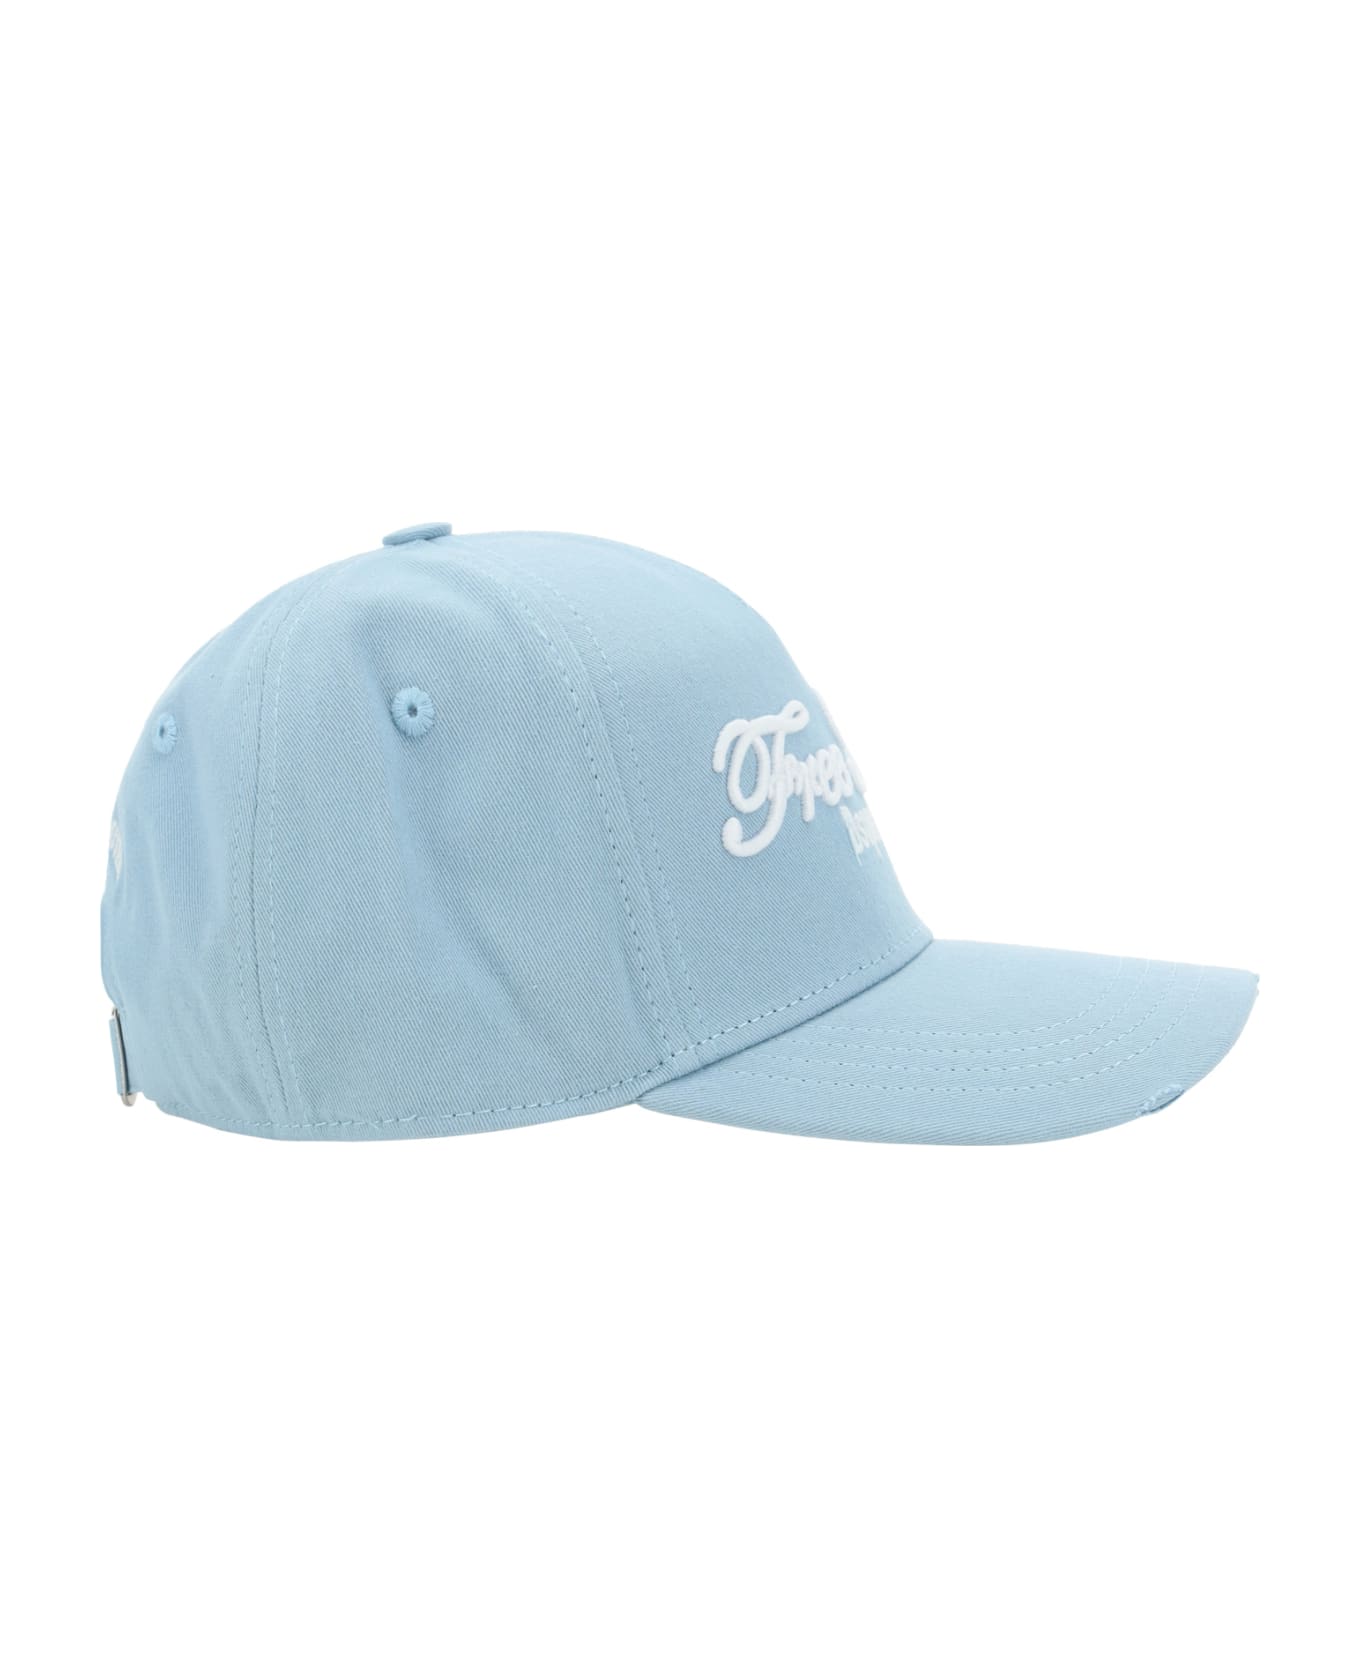 Dsquared2 Baseball Cap - Azzurro+bianco 帽子